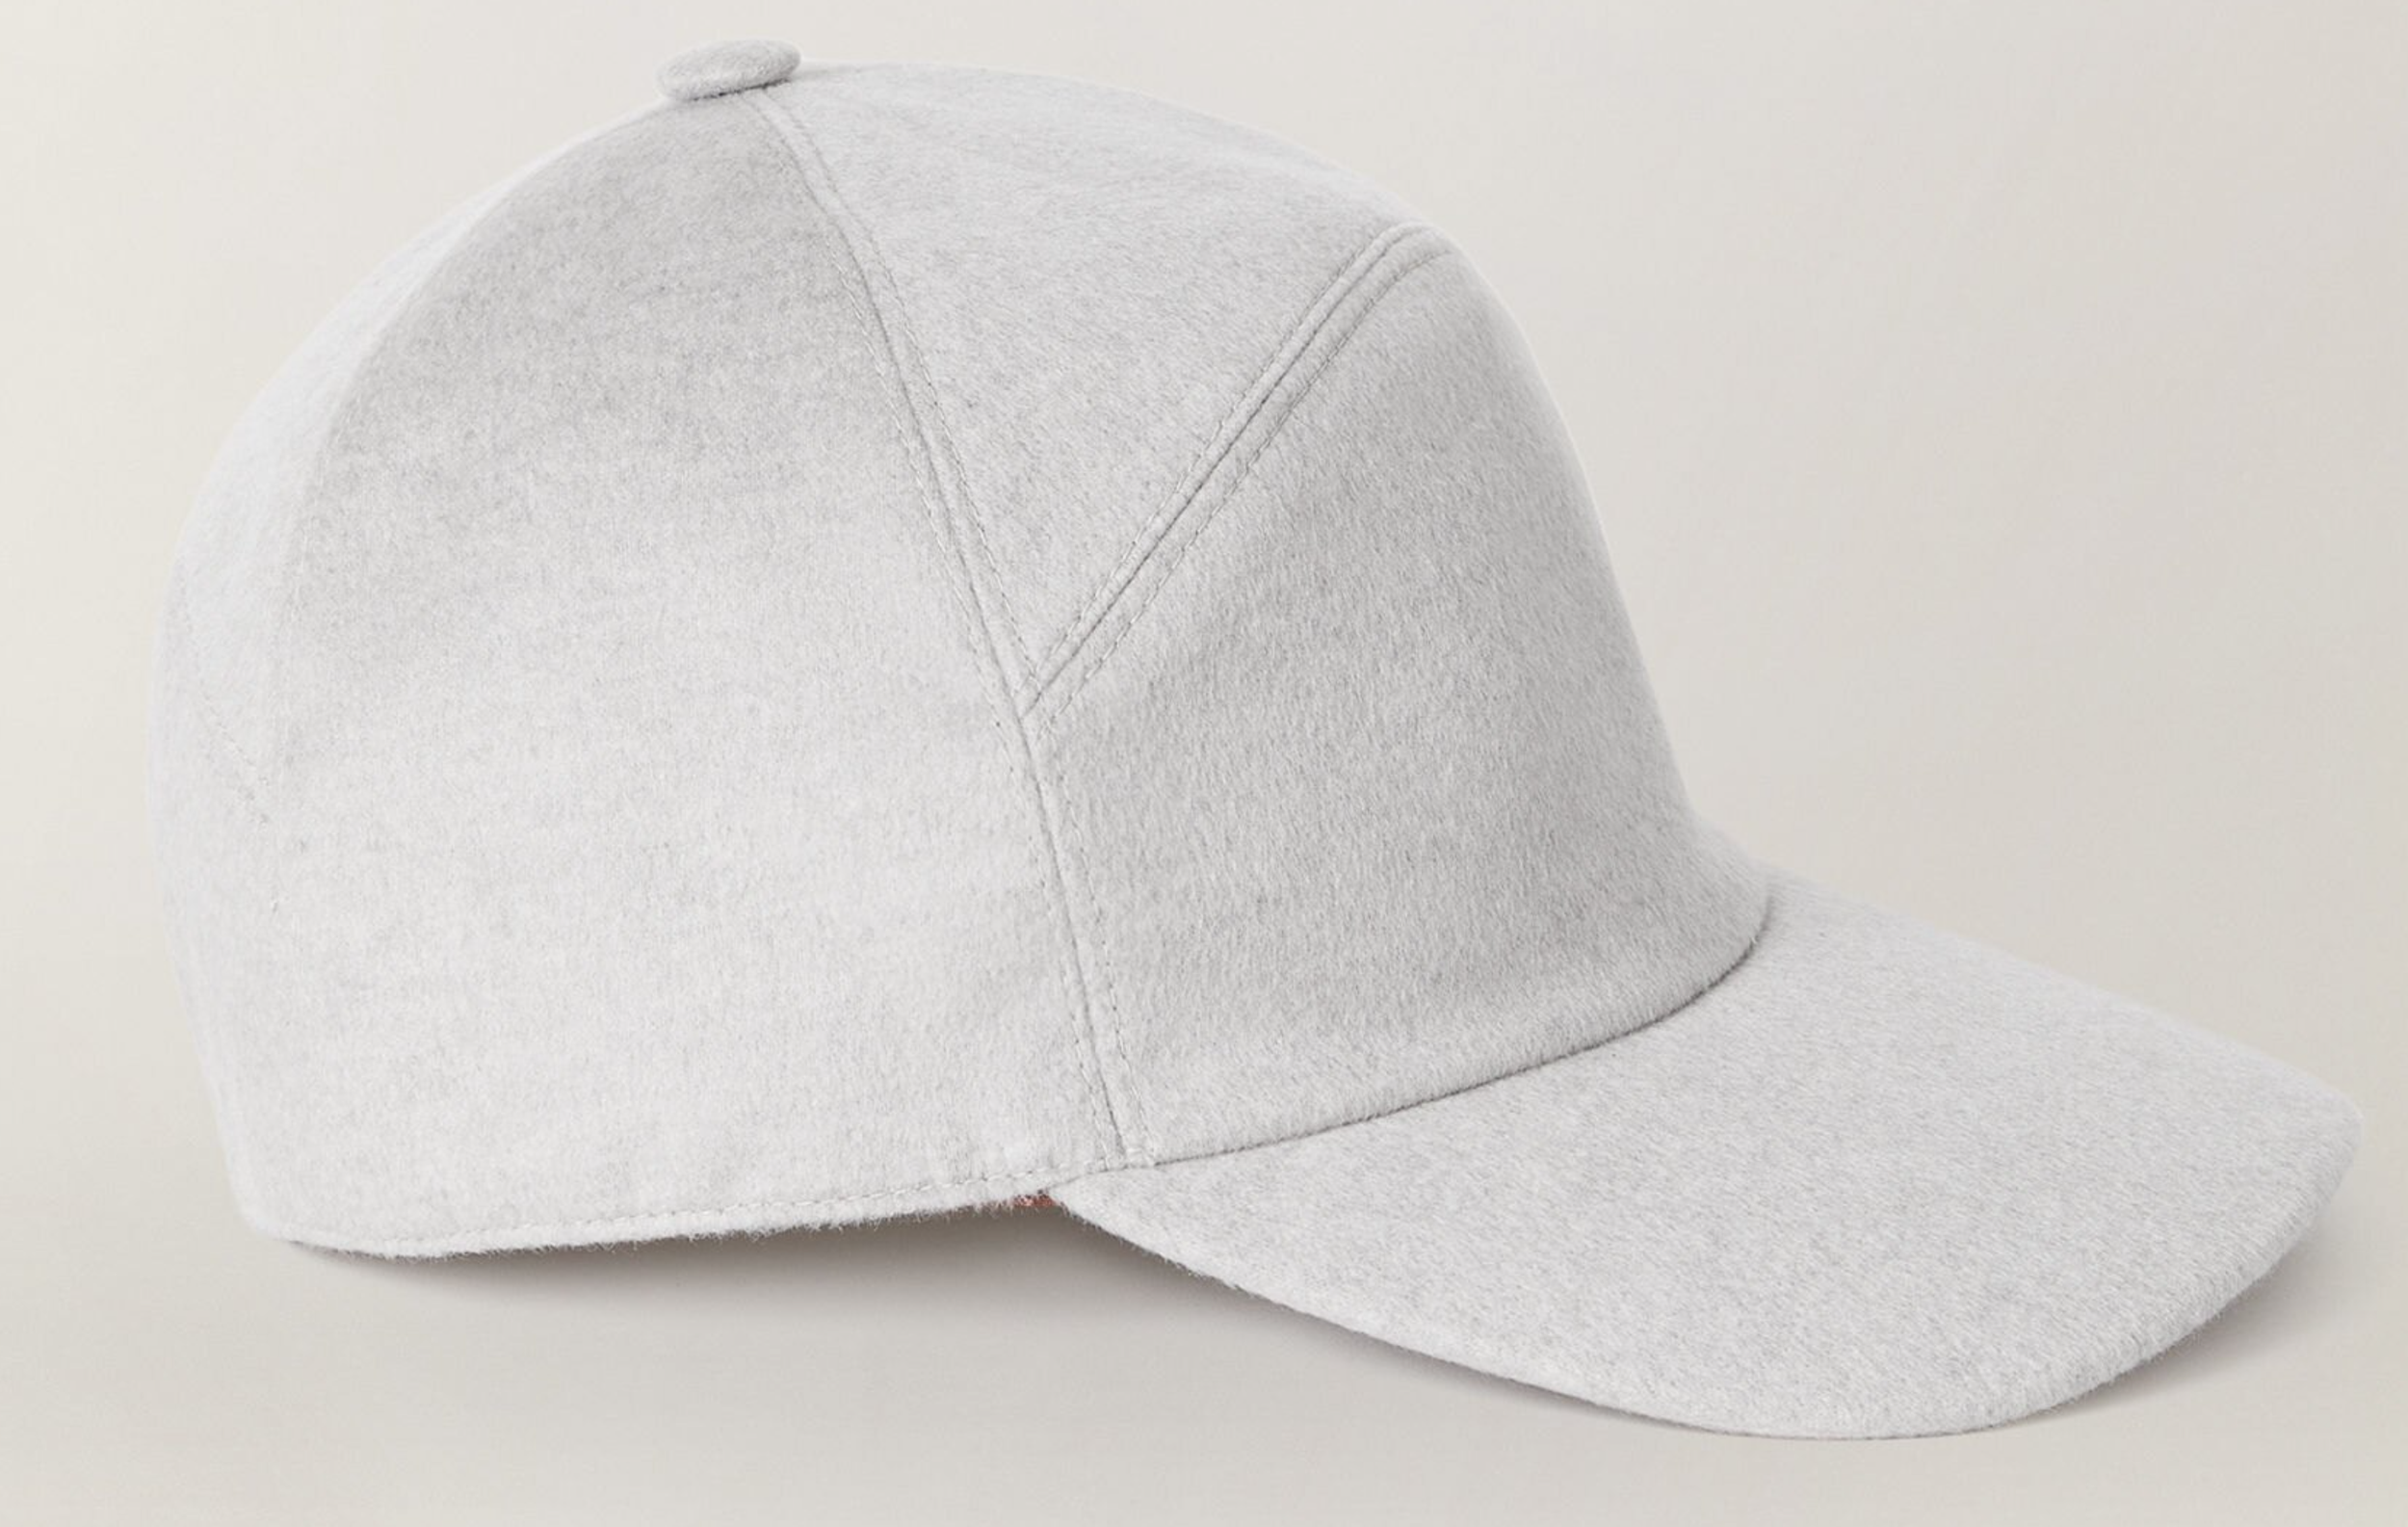 Is A $625 Baseball Hat From Loro Piana Worth It? — The Peak Lapel